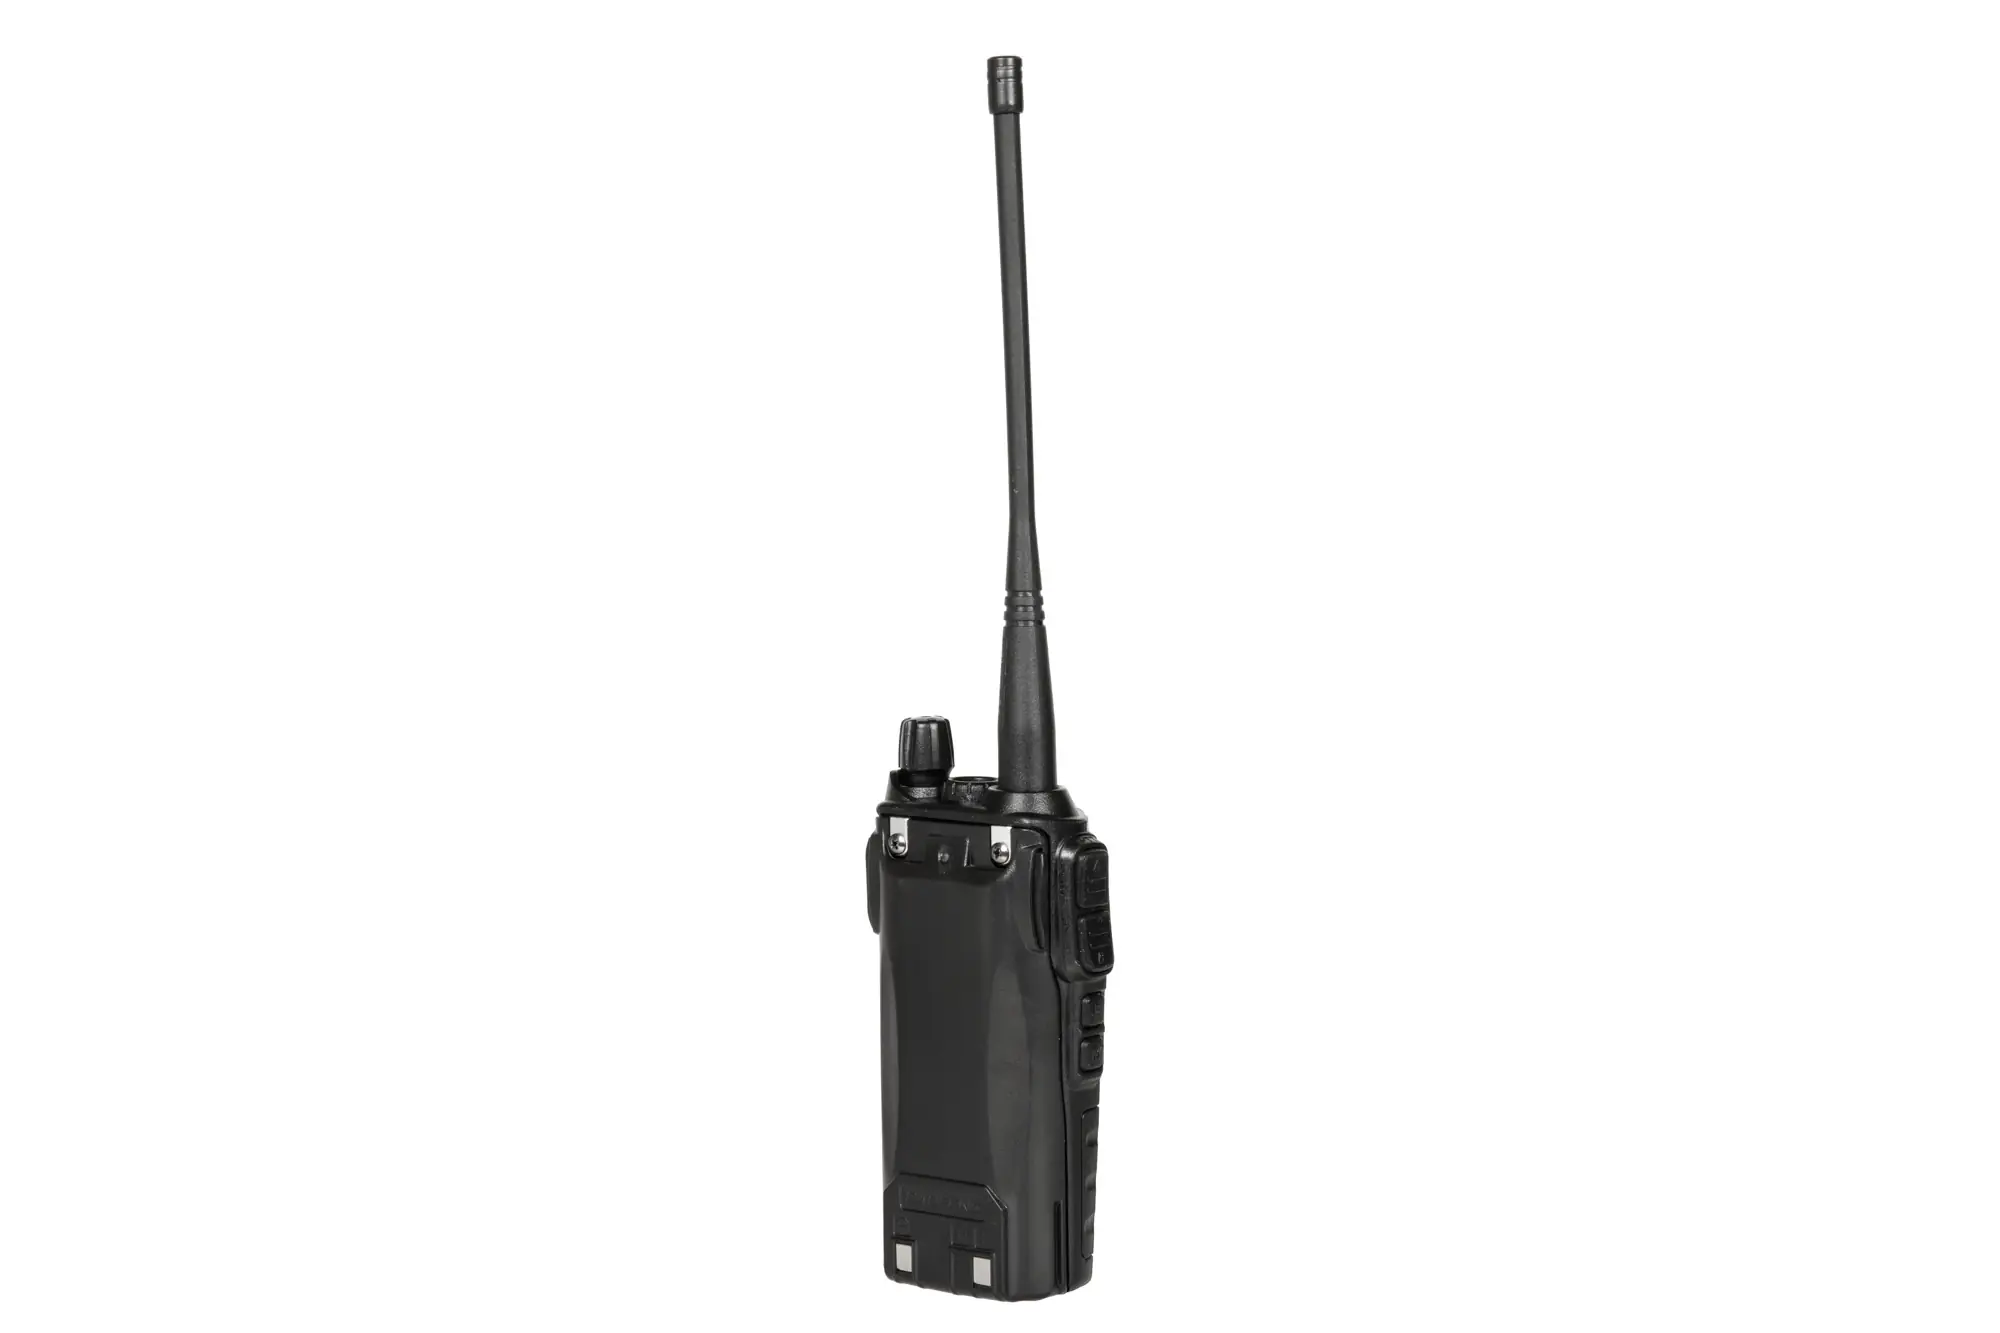 Specna Arms Dualband Shortie 82 Funkgerät (VHF/UHF)